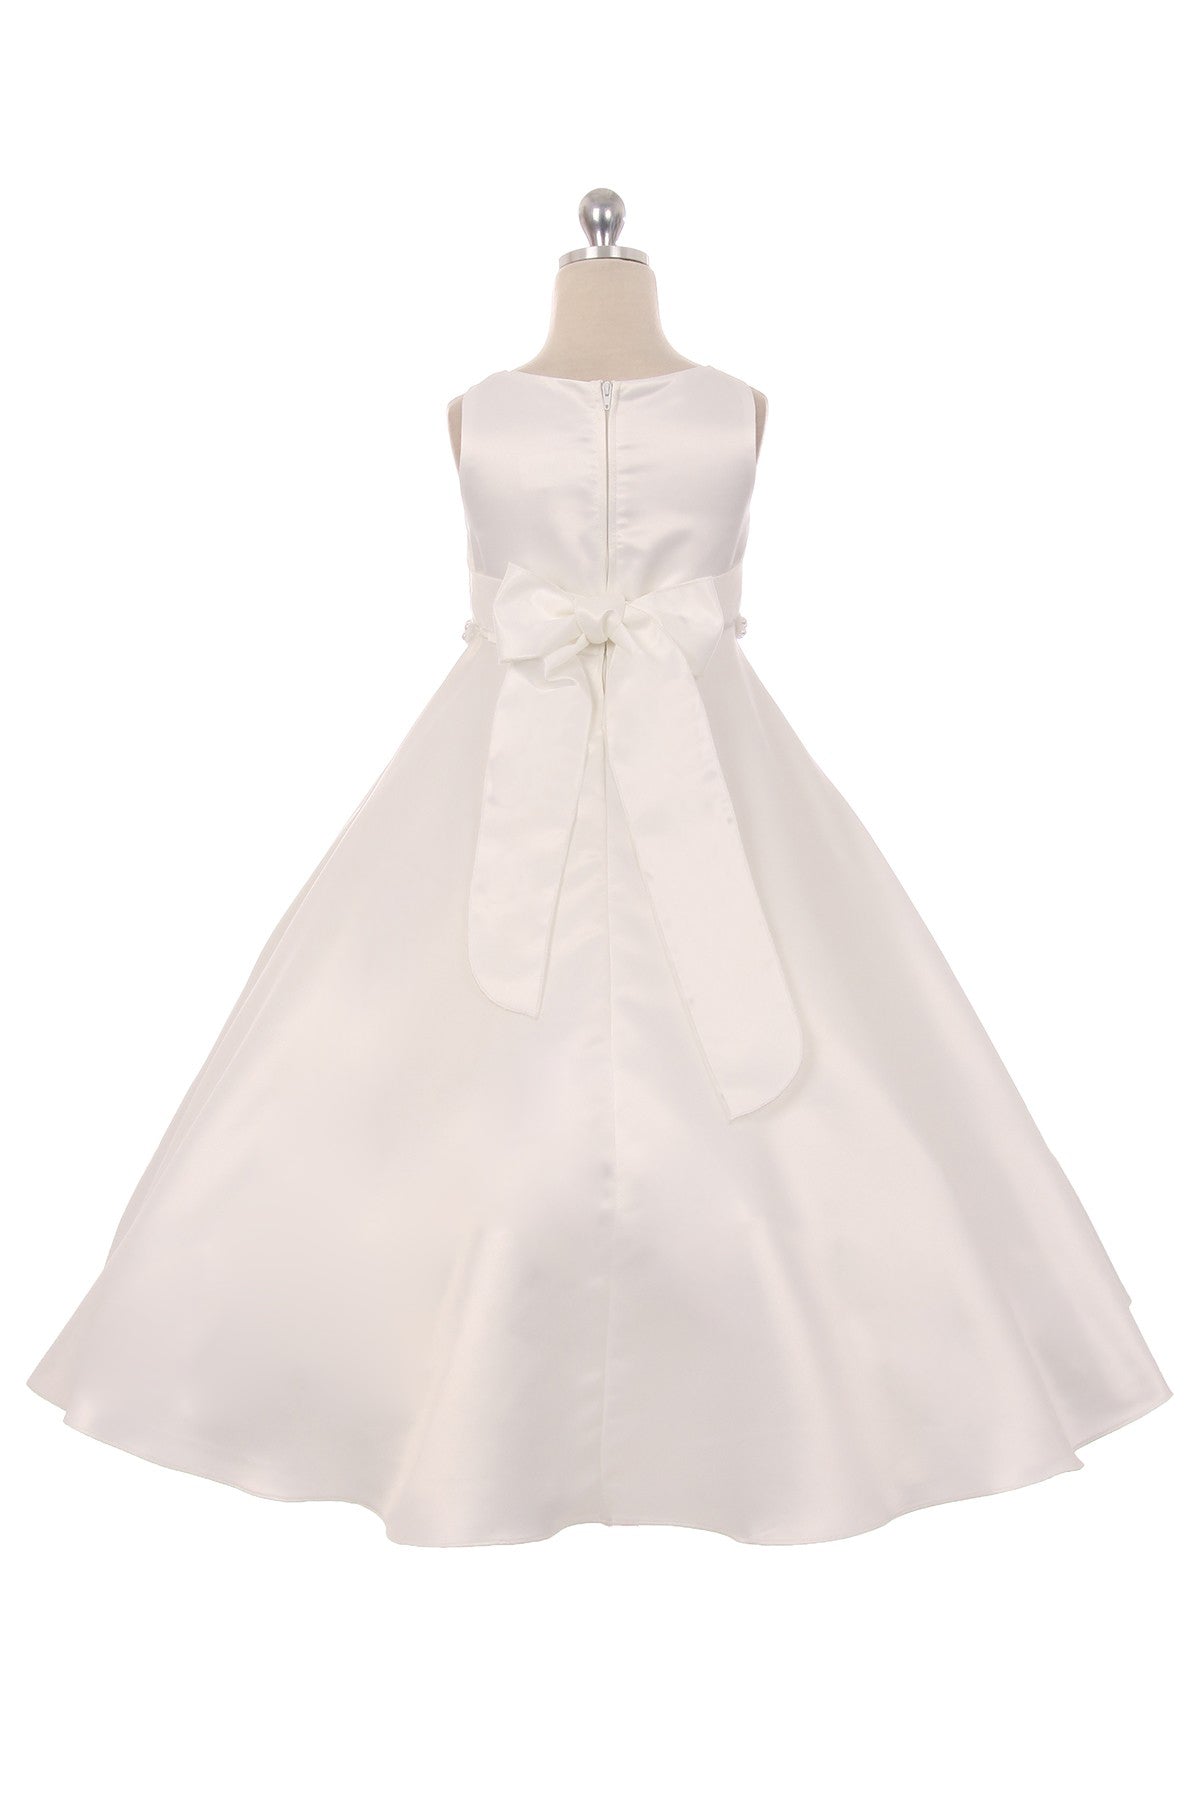 386 Long Satin Pearl Trim Girls Communion Dress with Plus Sizes